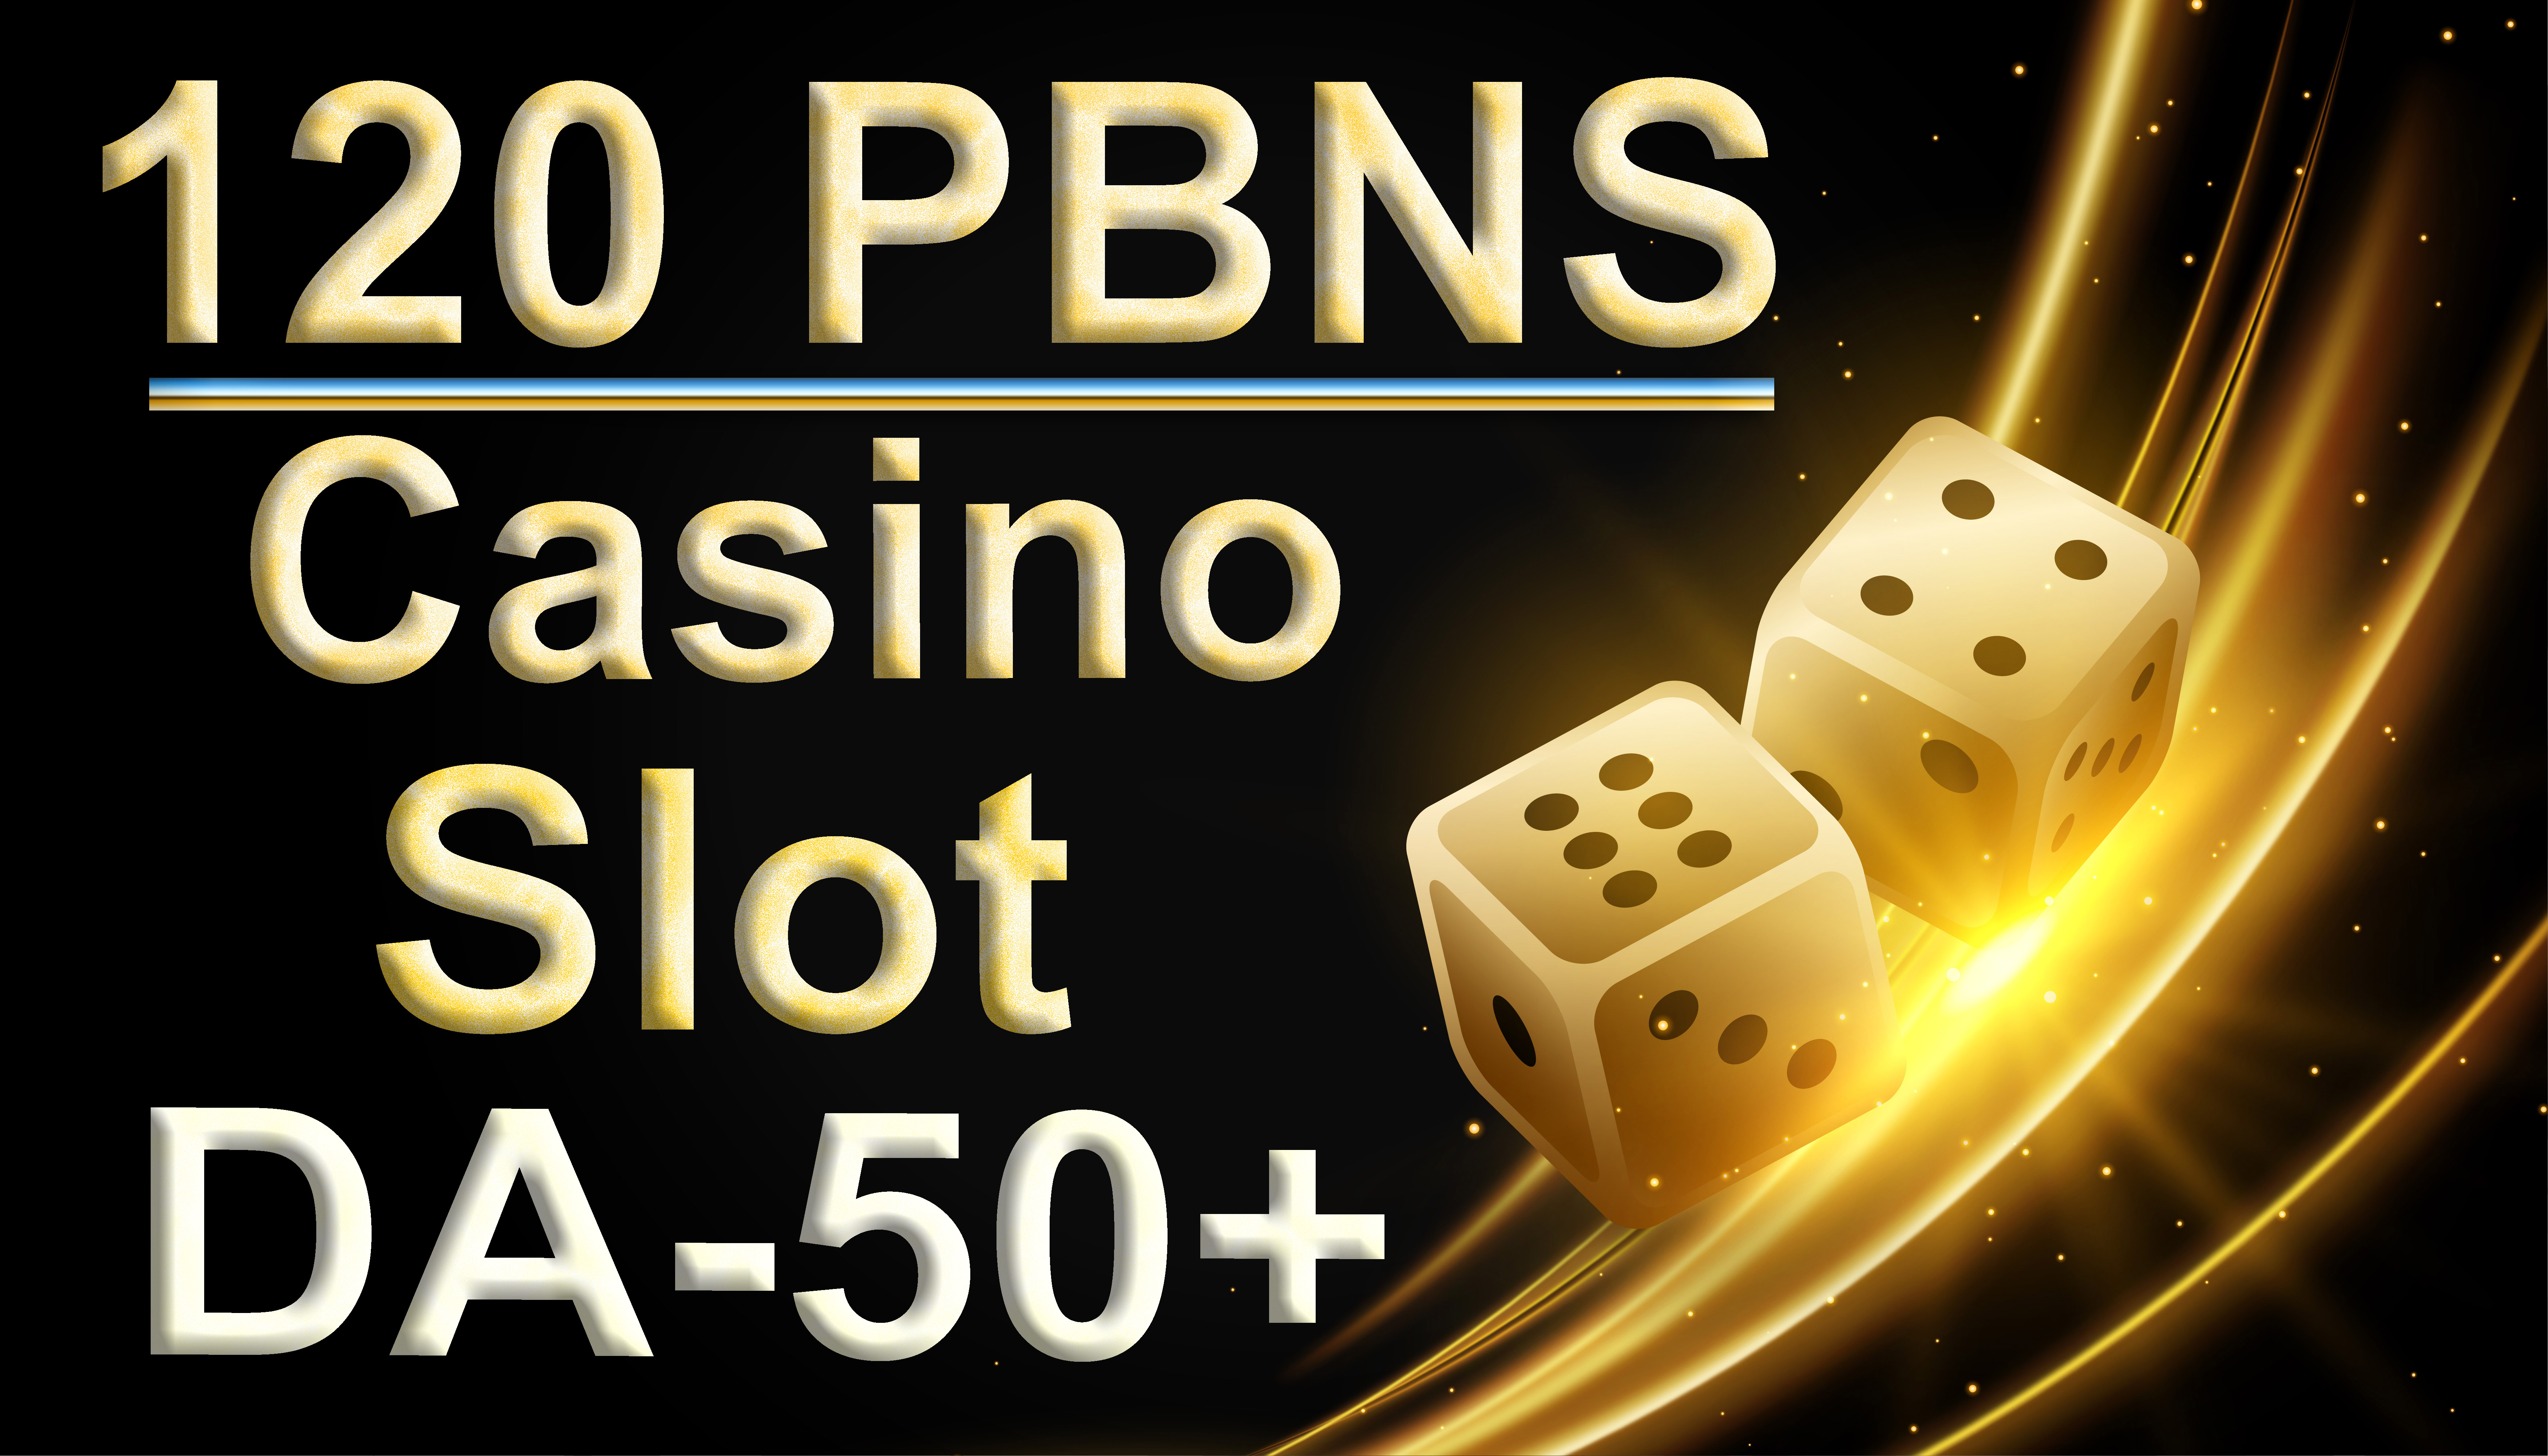 Get 120 PBN with Slot, Casino, Poker Domains DA 50+ Dofollow Posts